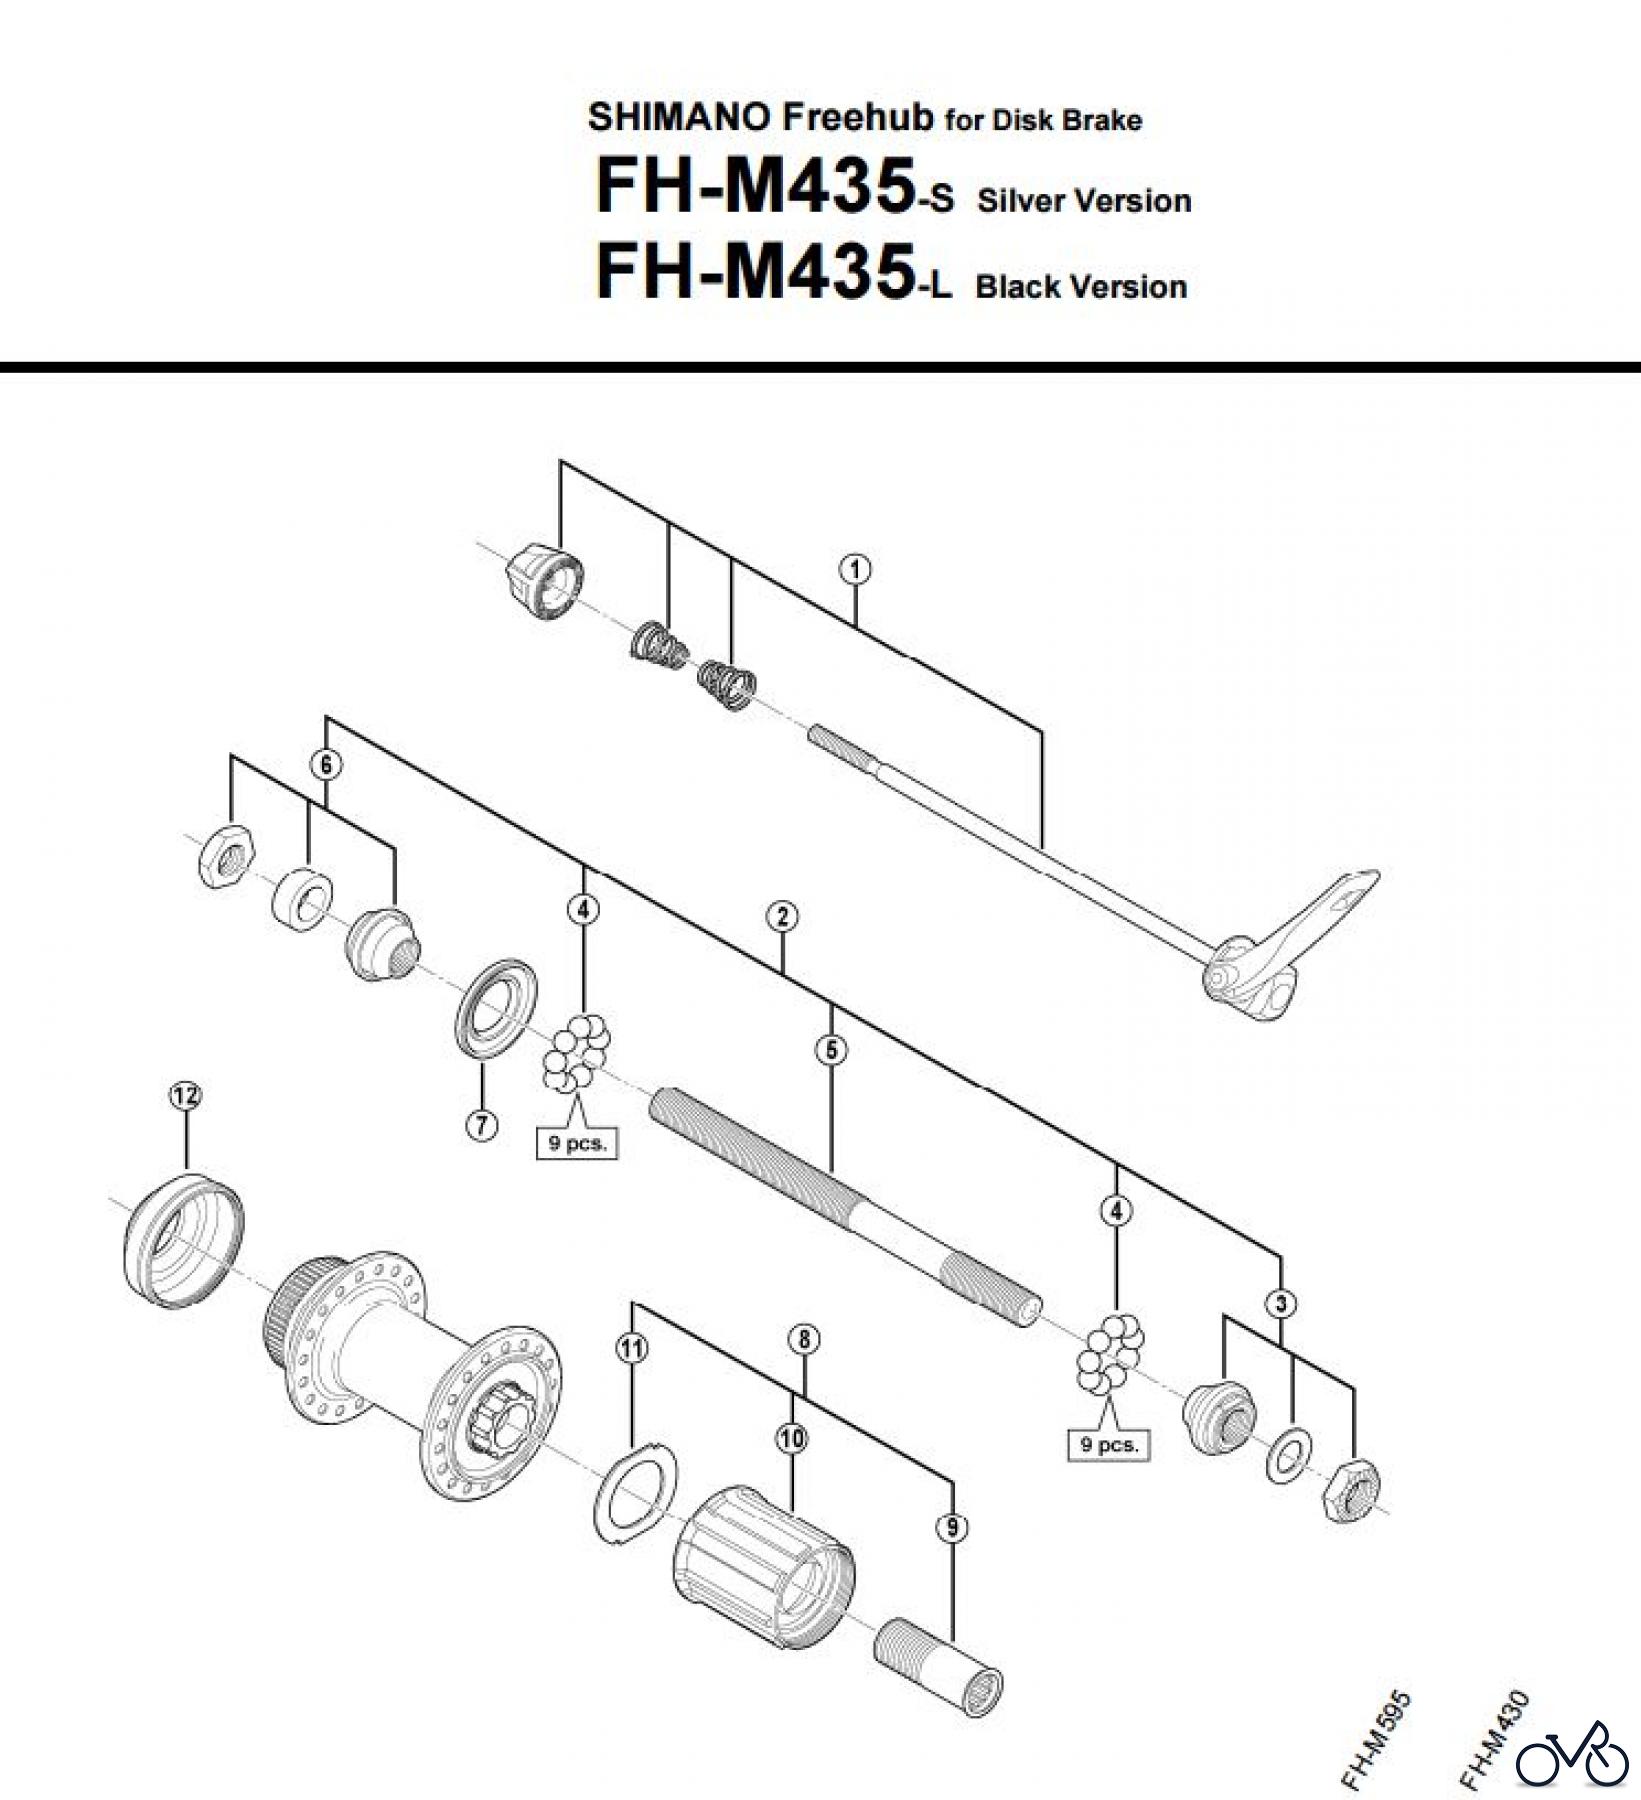  Shimano FH Free Hub - Freilaufnabe FH-M435 -2996A Kassettennabe